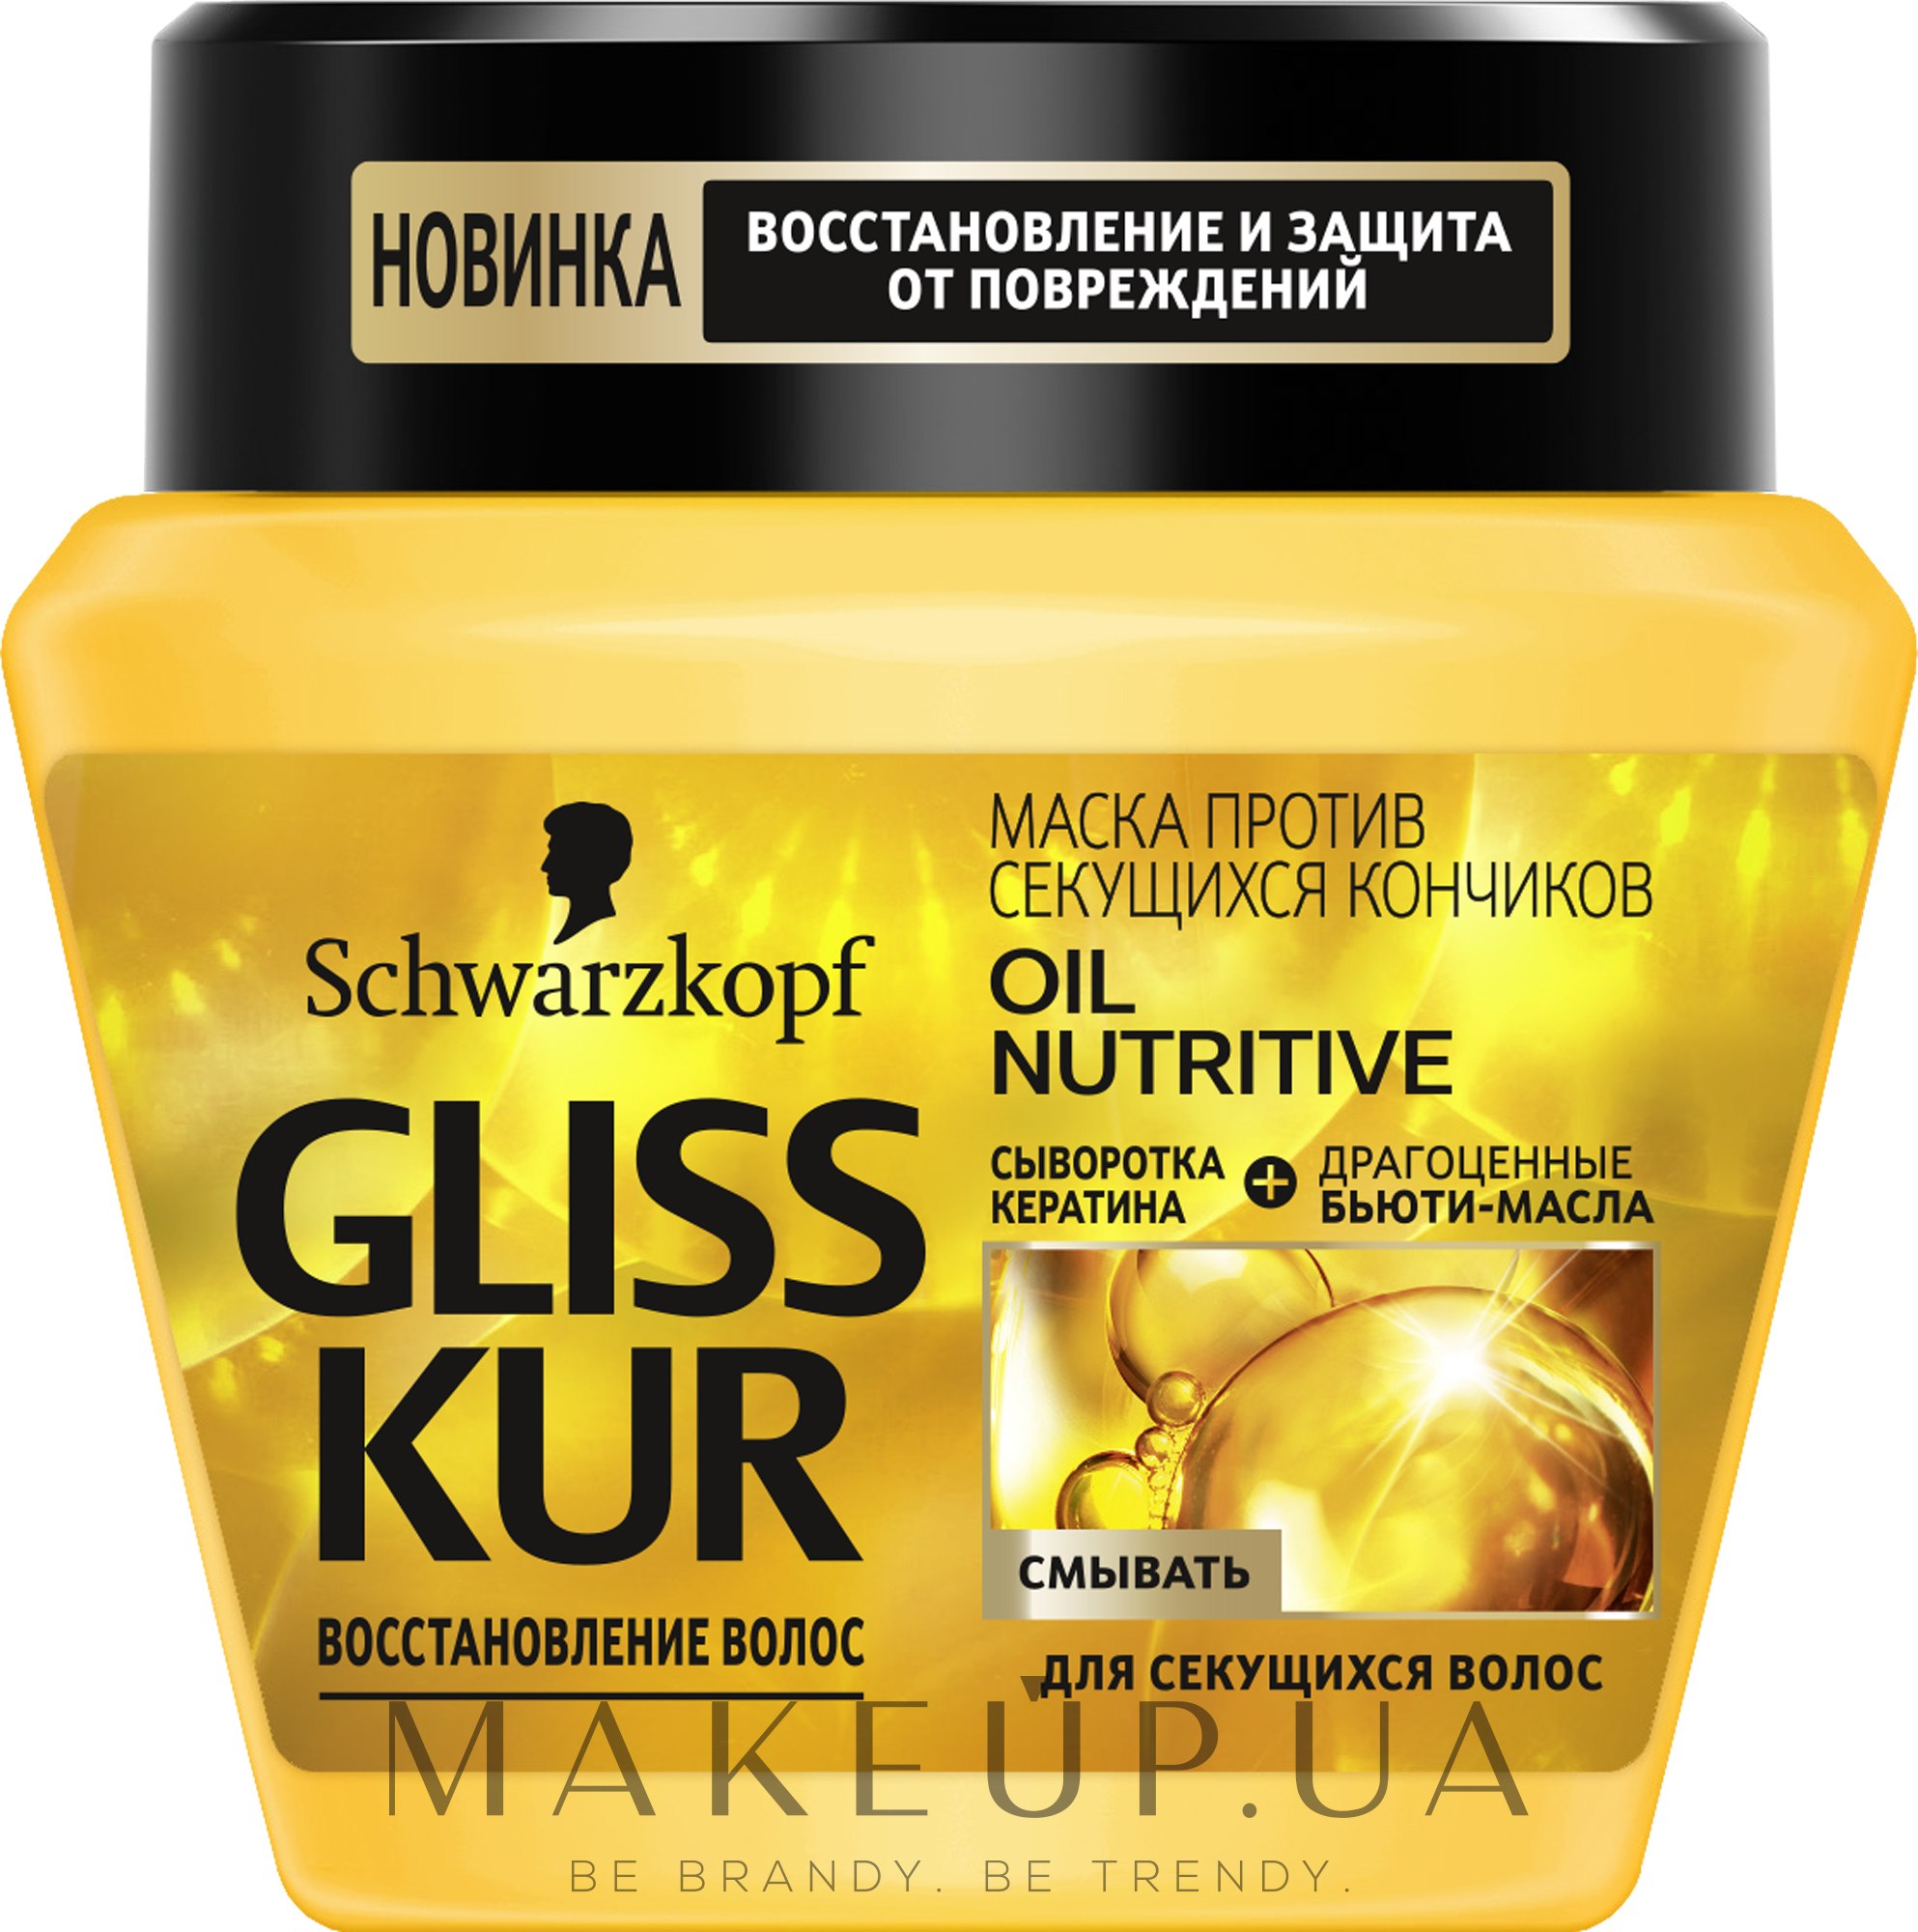 Маска глисс кур. Gliss Kur маска для волос. Oil Nutritive маска для секущихся волос Gliss Kur. Gliss Kur маска 300мл в асс. Маска для волос желтая Gloss Kur.